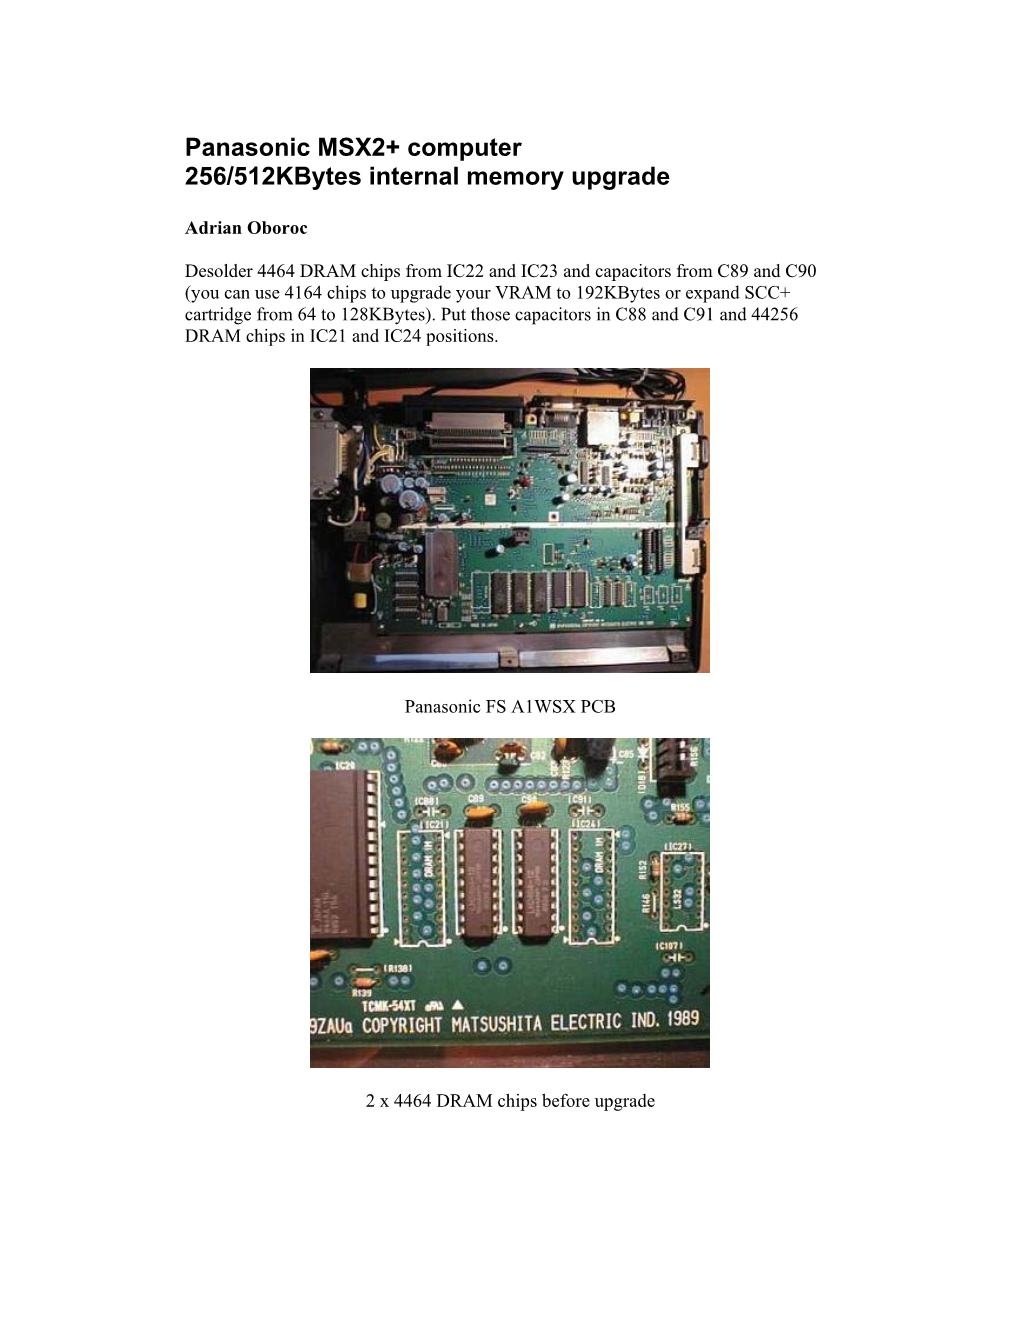 Panasonic MSX2+ Computer 256/512Kbytes Internal Memory Upgrade